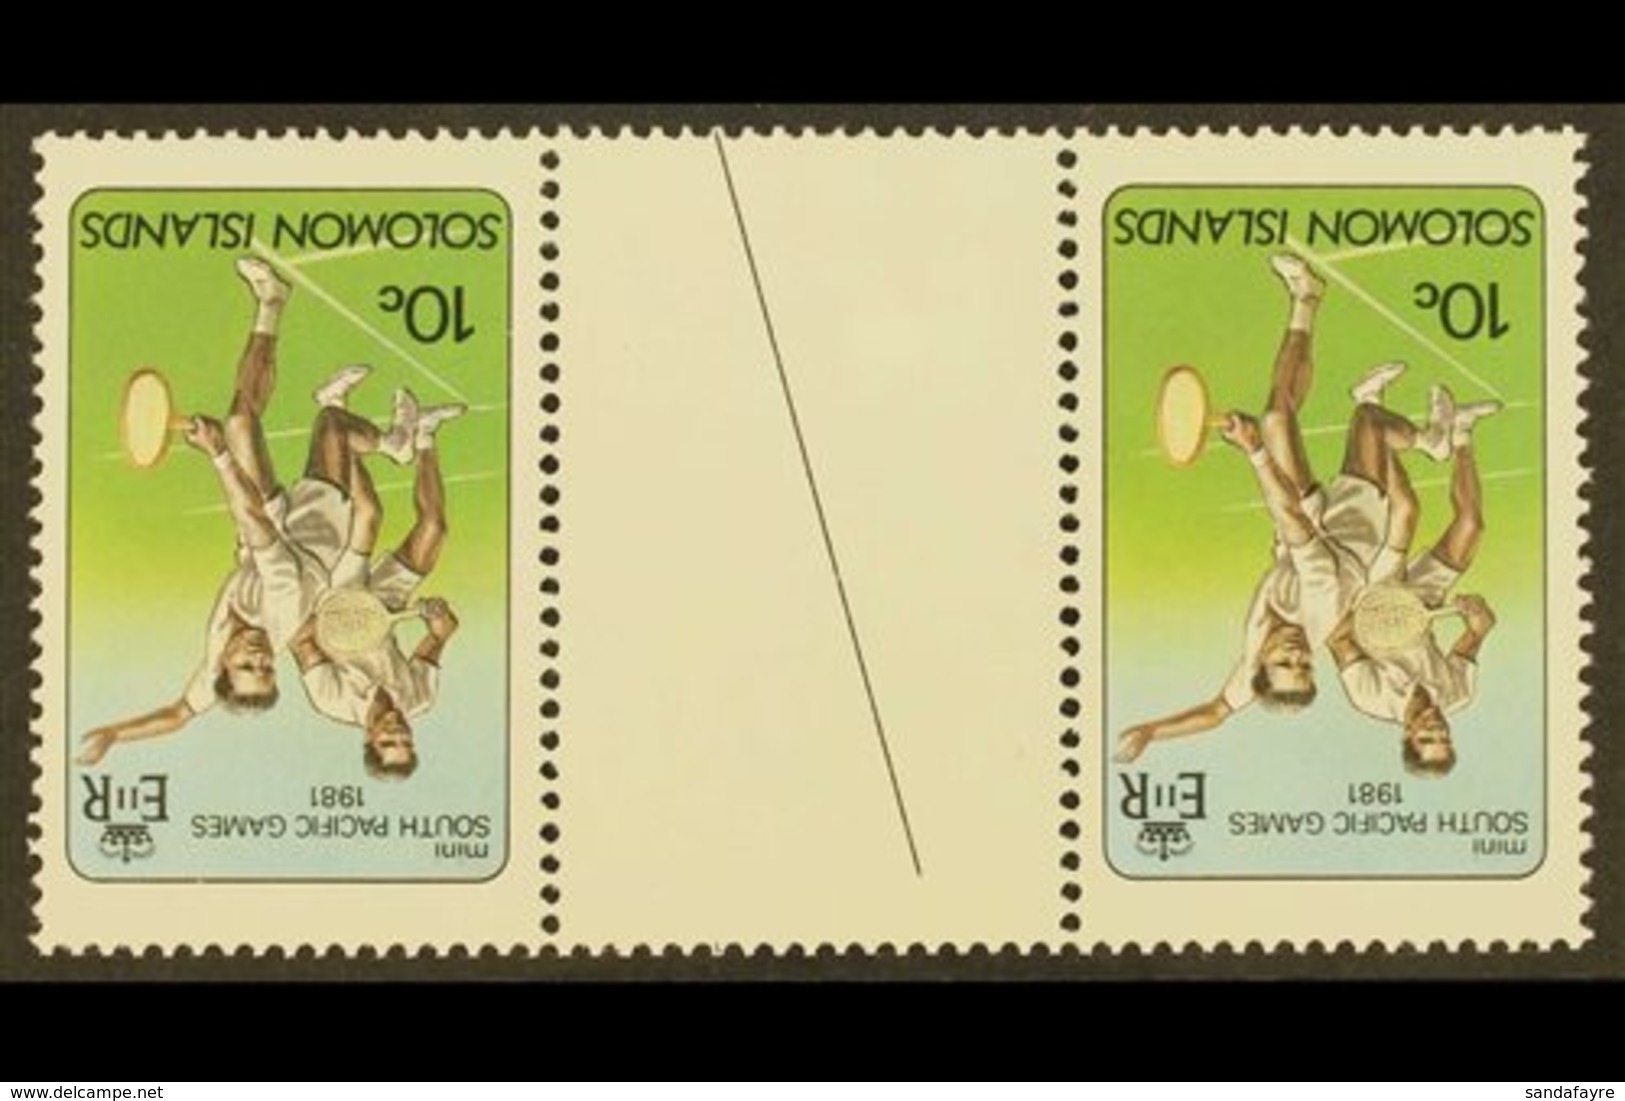 1981 10c Pacific Games - Tennis WATERMARK INVERTED Variety, SG 440w, Never Hinged Mint Horiz GUTTER PAIR, Fresh & Scarce - British Solomon Islands (...-1978)